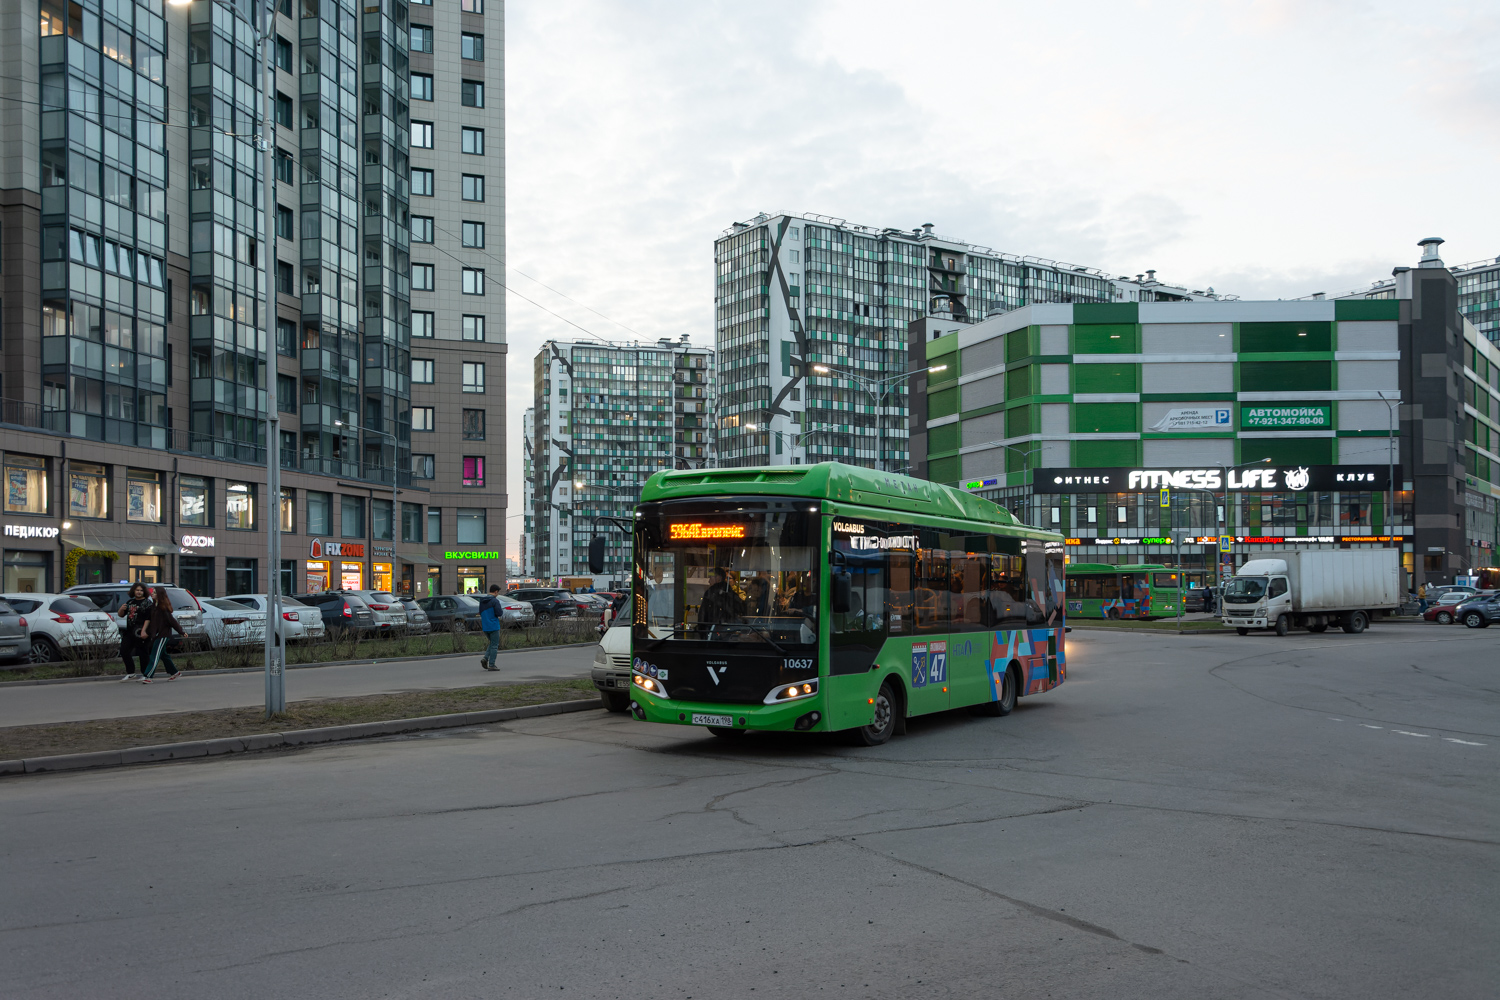 圣彼得堡, Volgabus-4298.G4 (CNG) # 10637